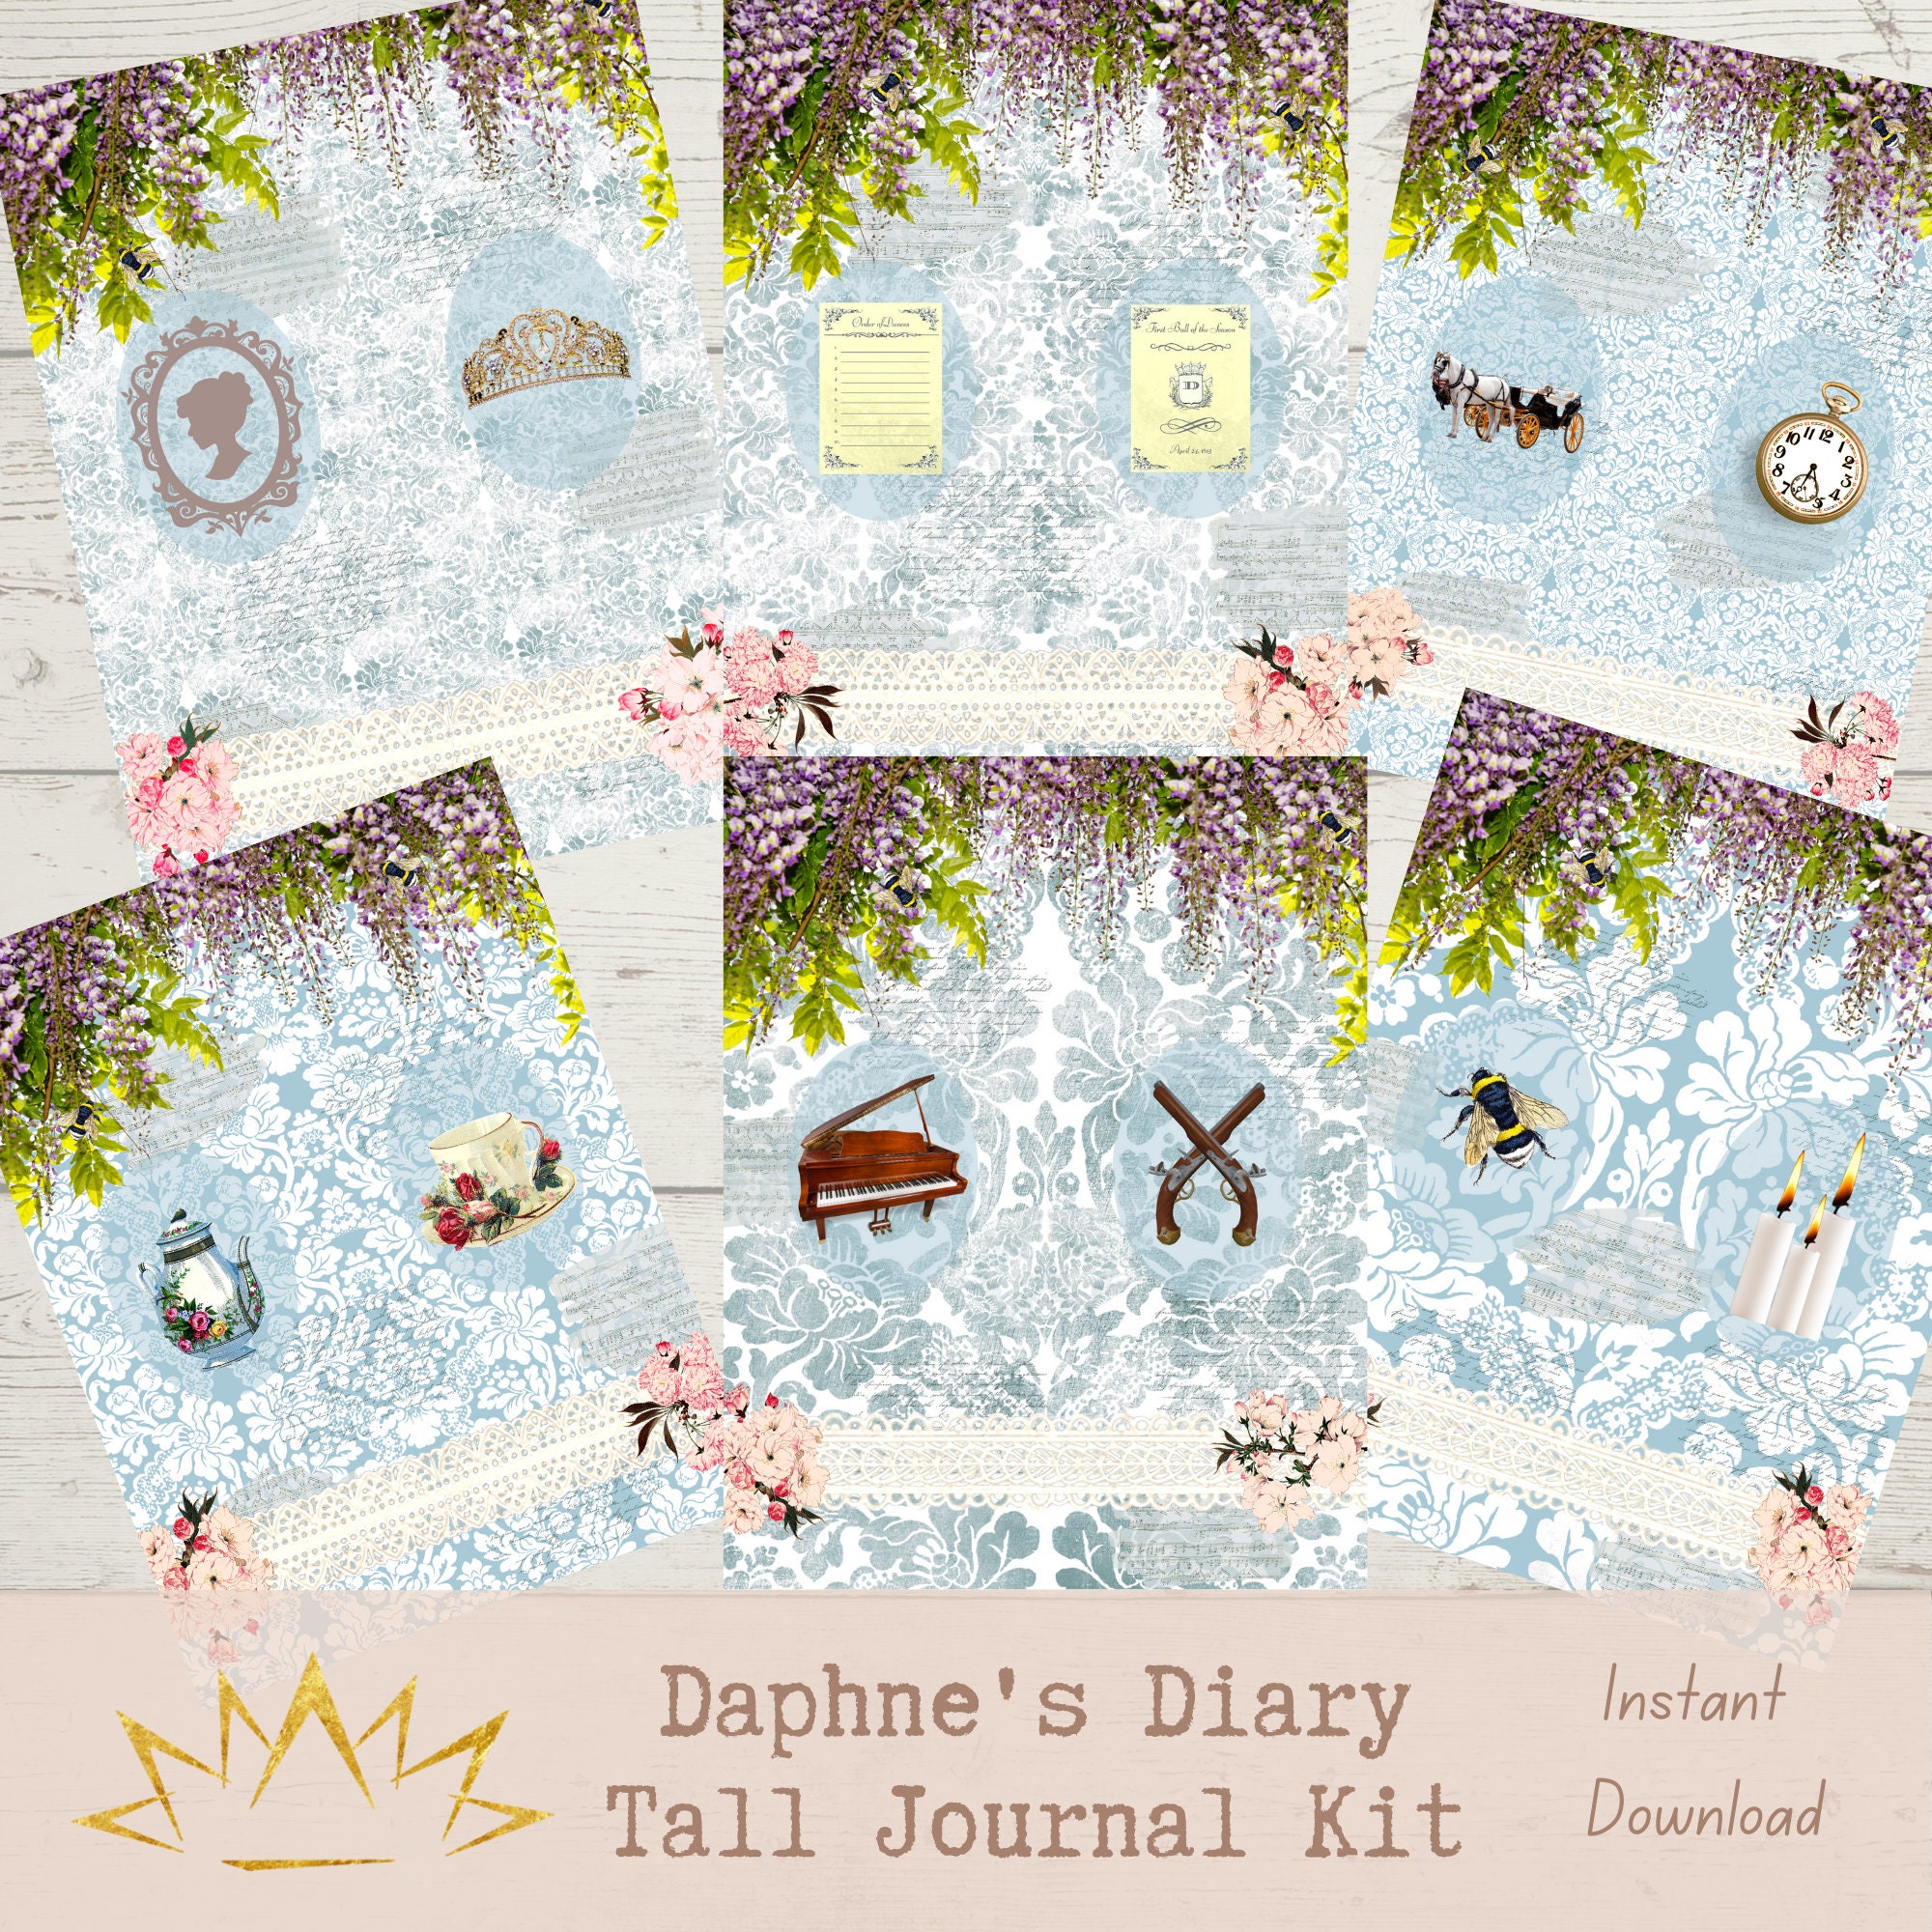 Daphne's Diary travel journal